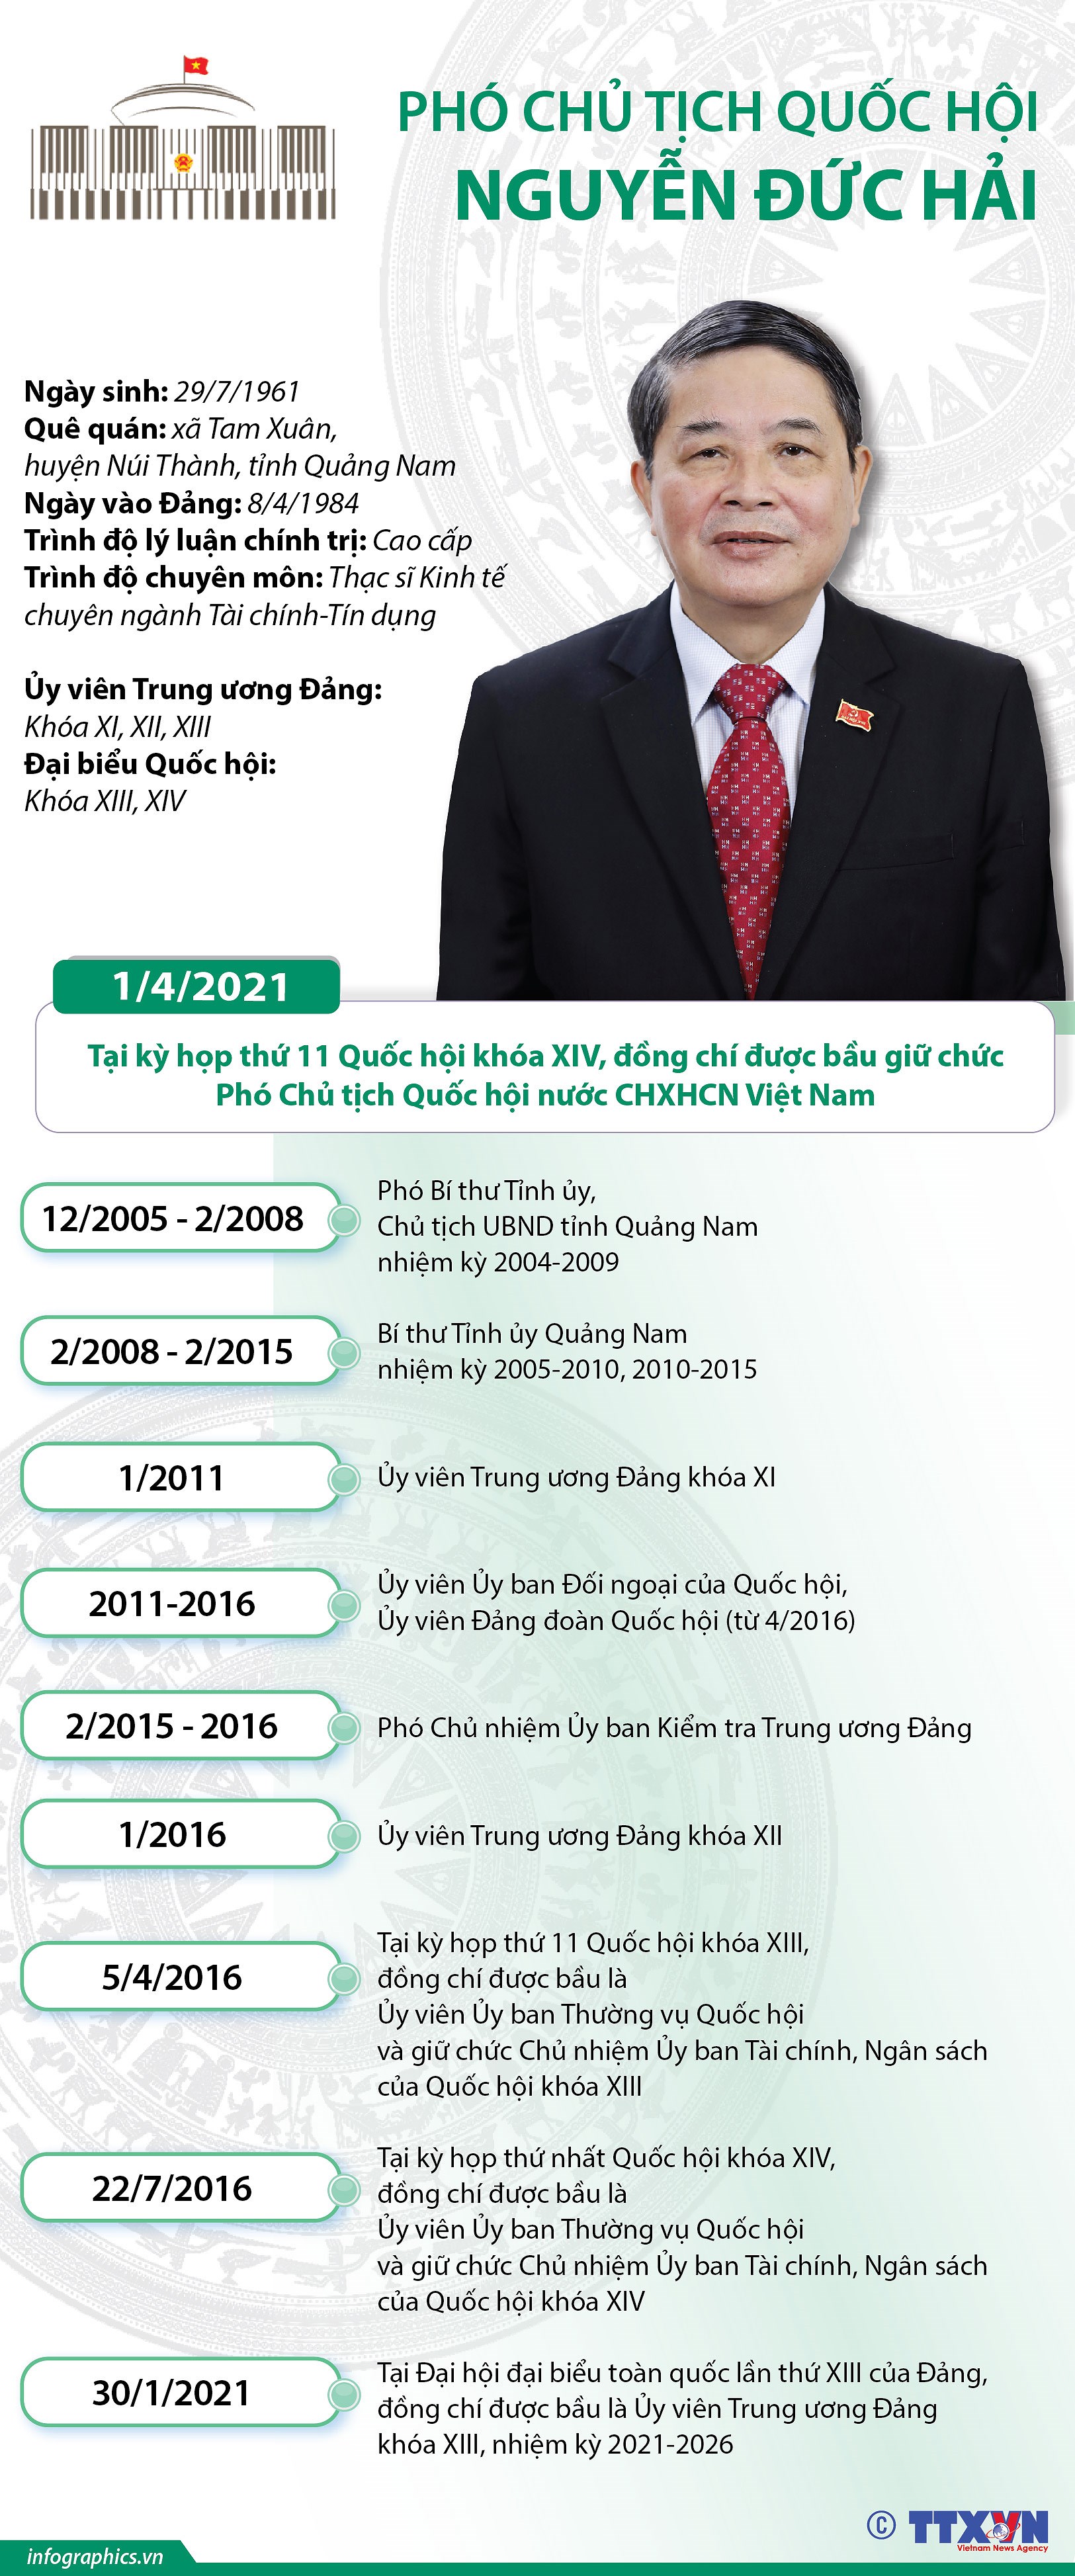 [Infographics] Tieu su Pho Chu tich Quoc hoi Nguyen Duc Hai hinh anh 1